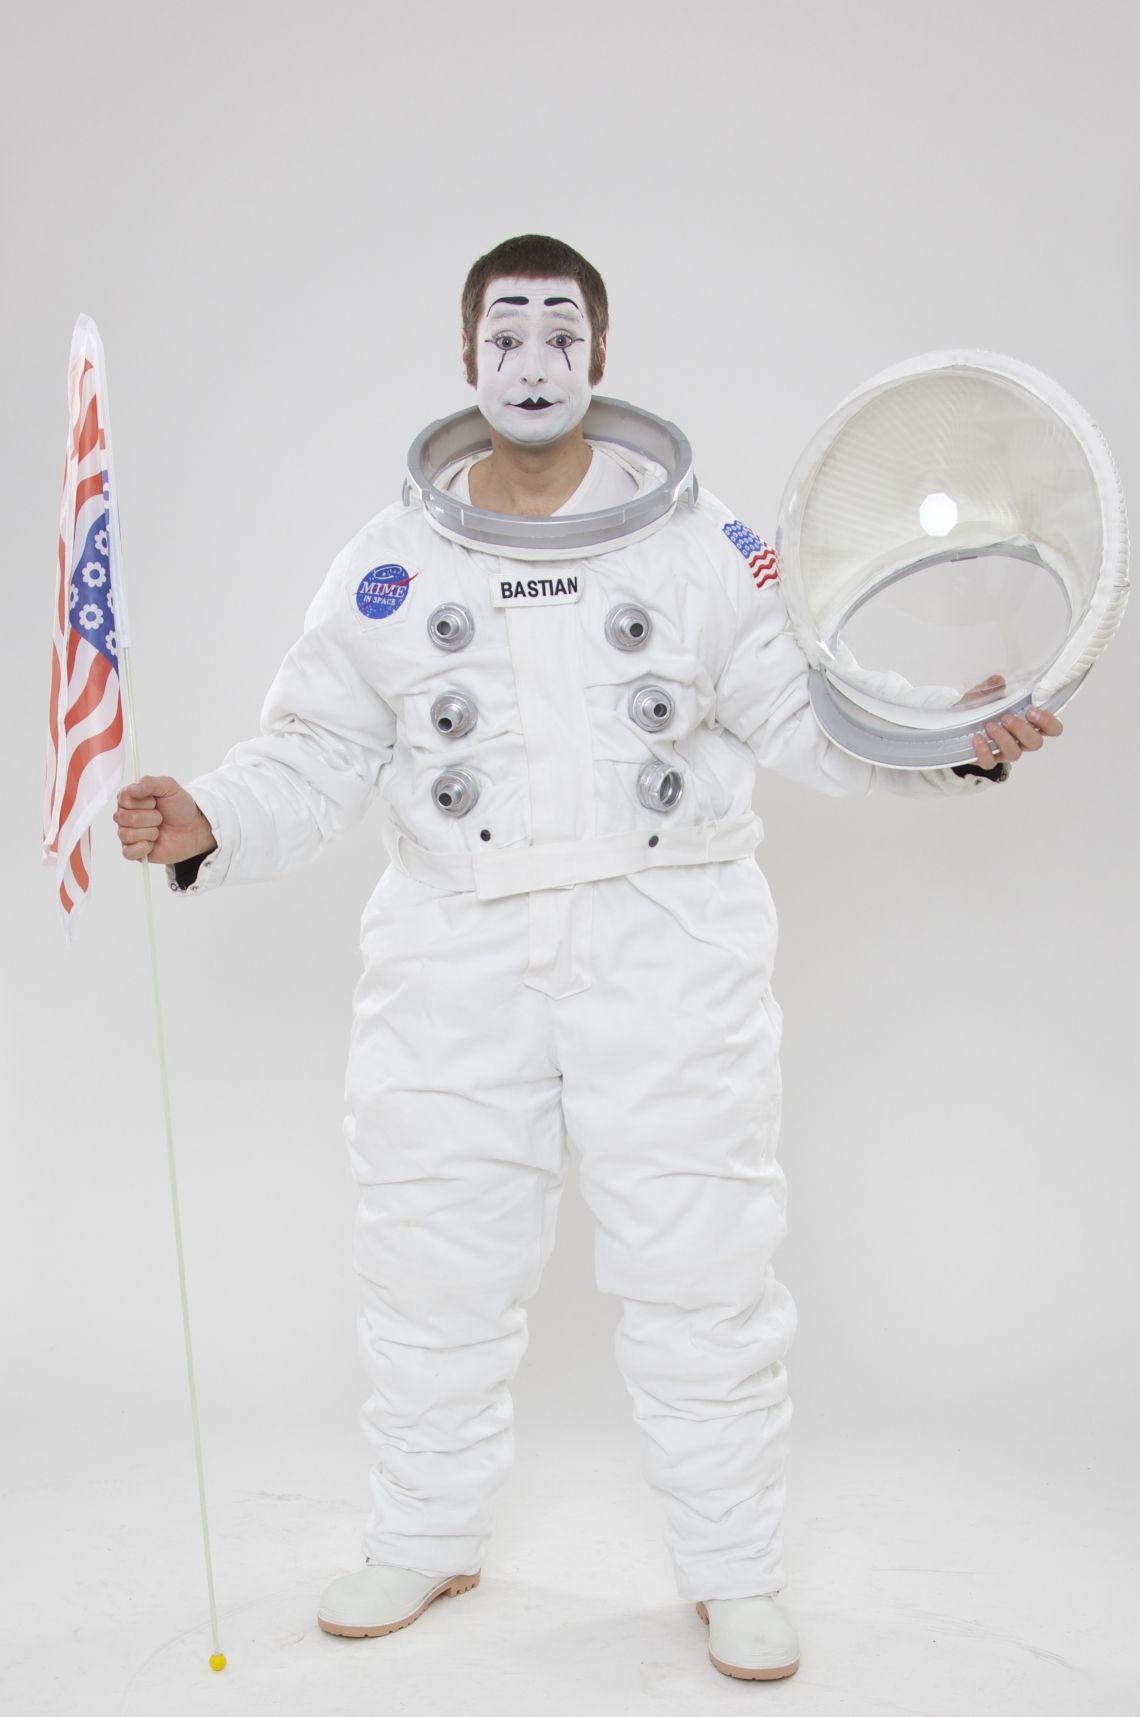 Bastian als Astronaut